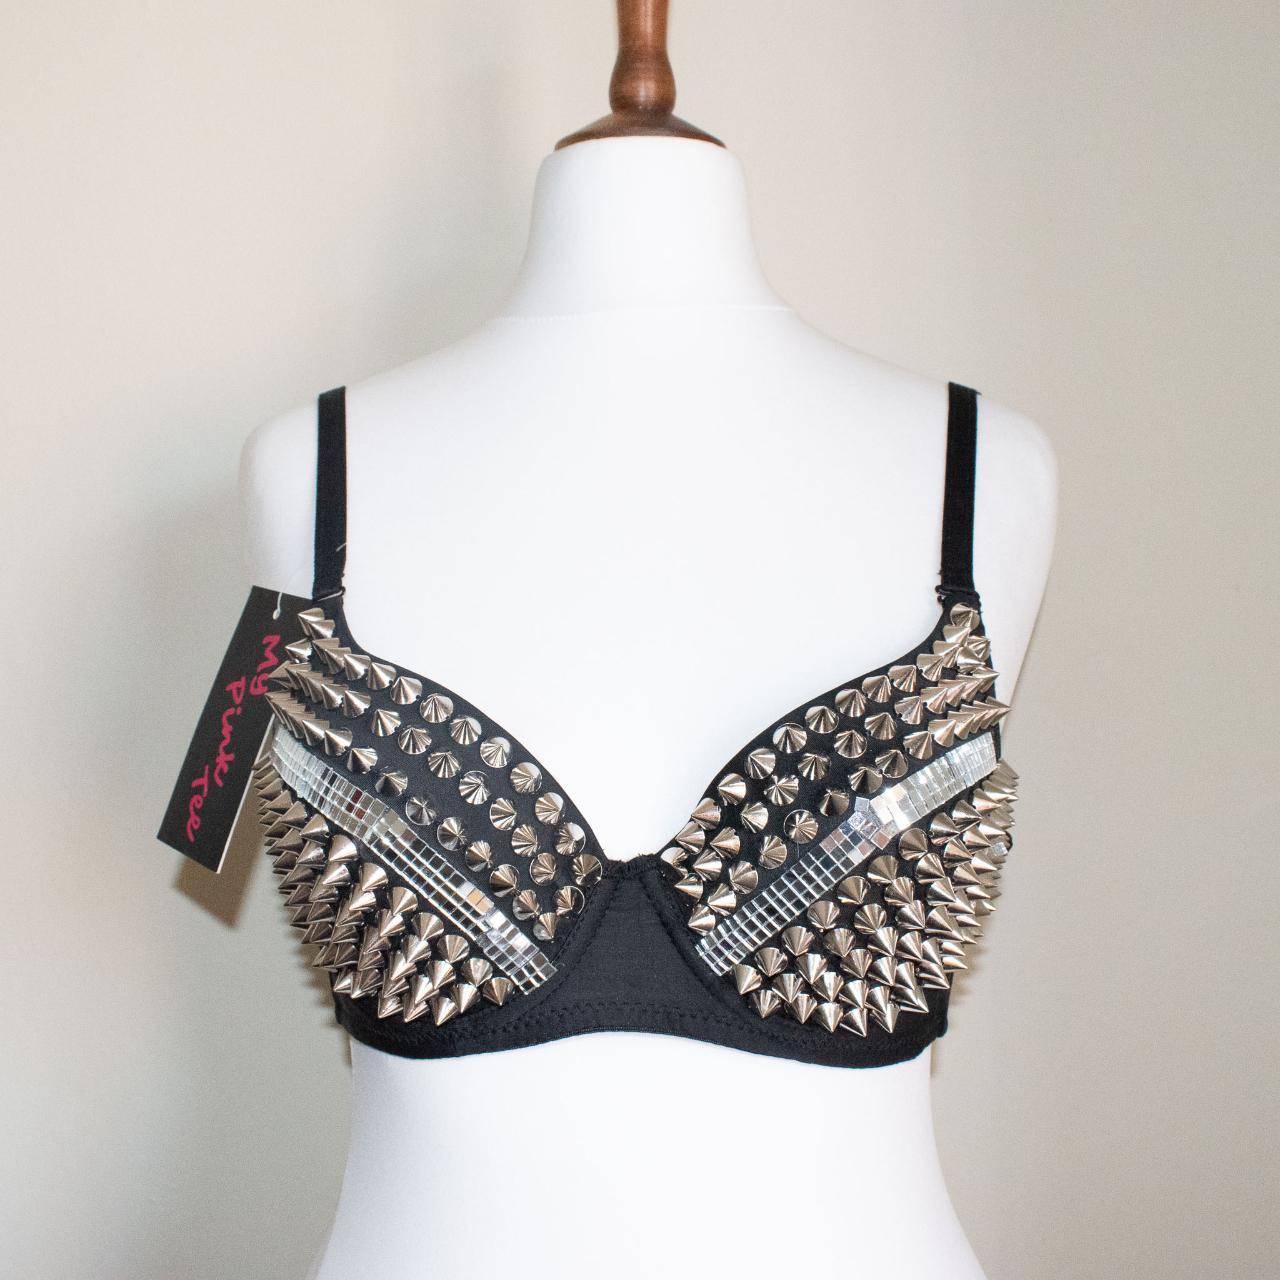 Studded bra, Spikey black bra top with silver metal